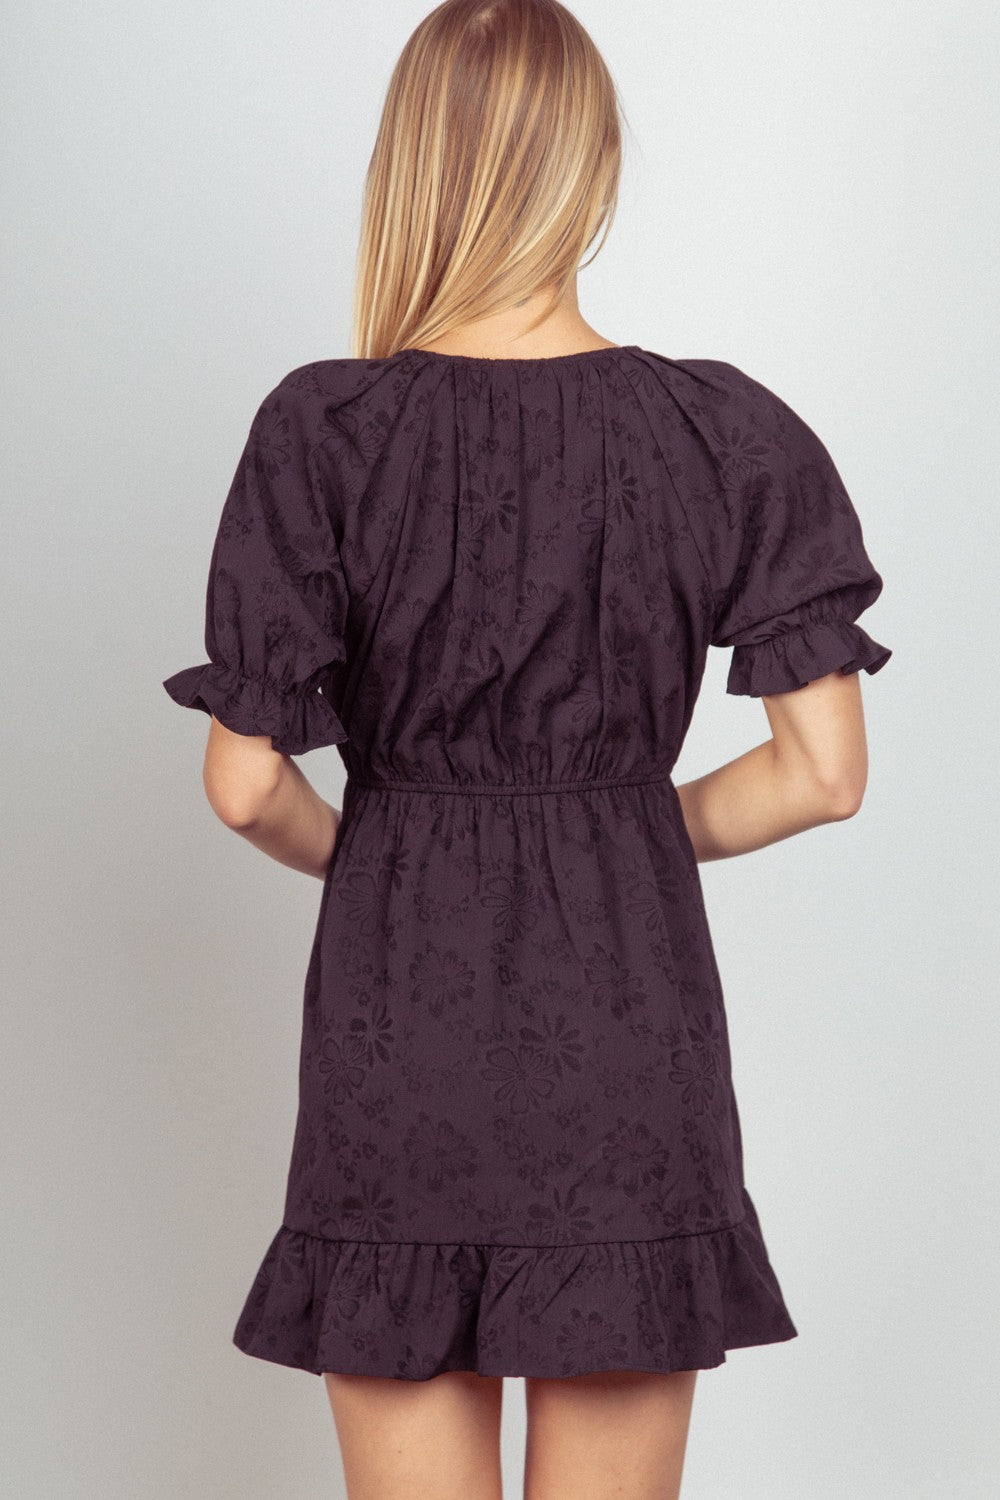 VERY J Floral Textured Woven Ruffled Mini Dress | Dress - CHANELIA